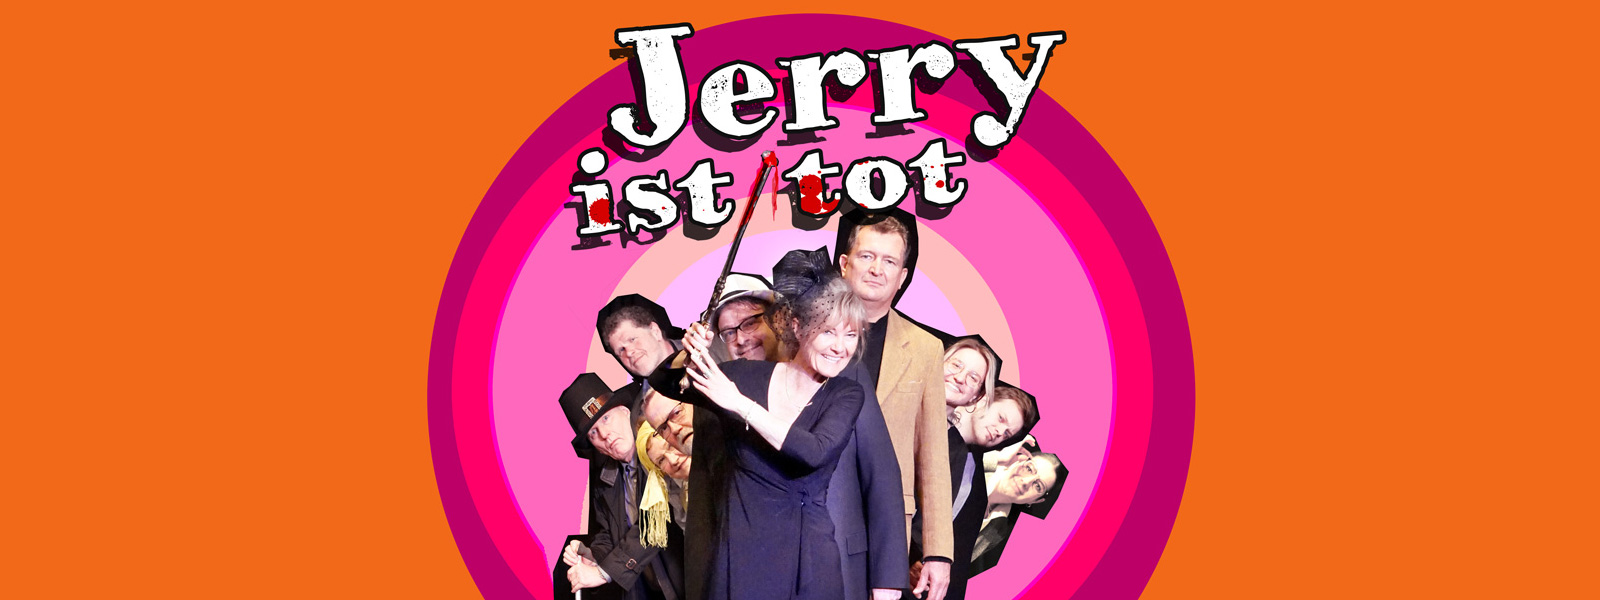 Jerry-ist-tot-Motiv-banner